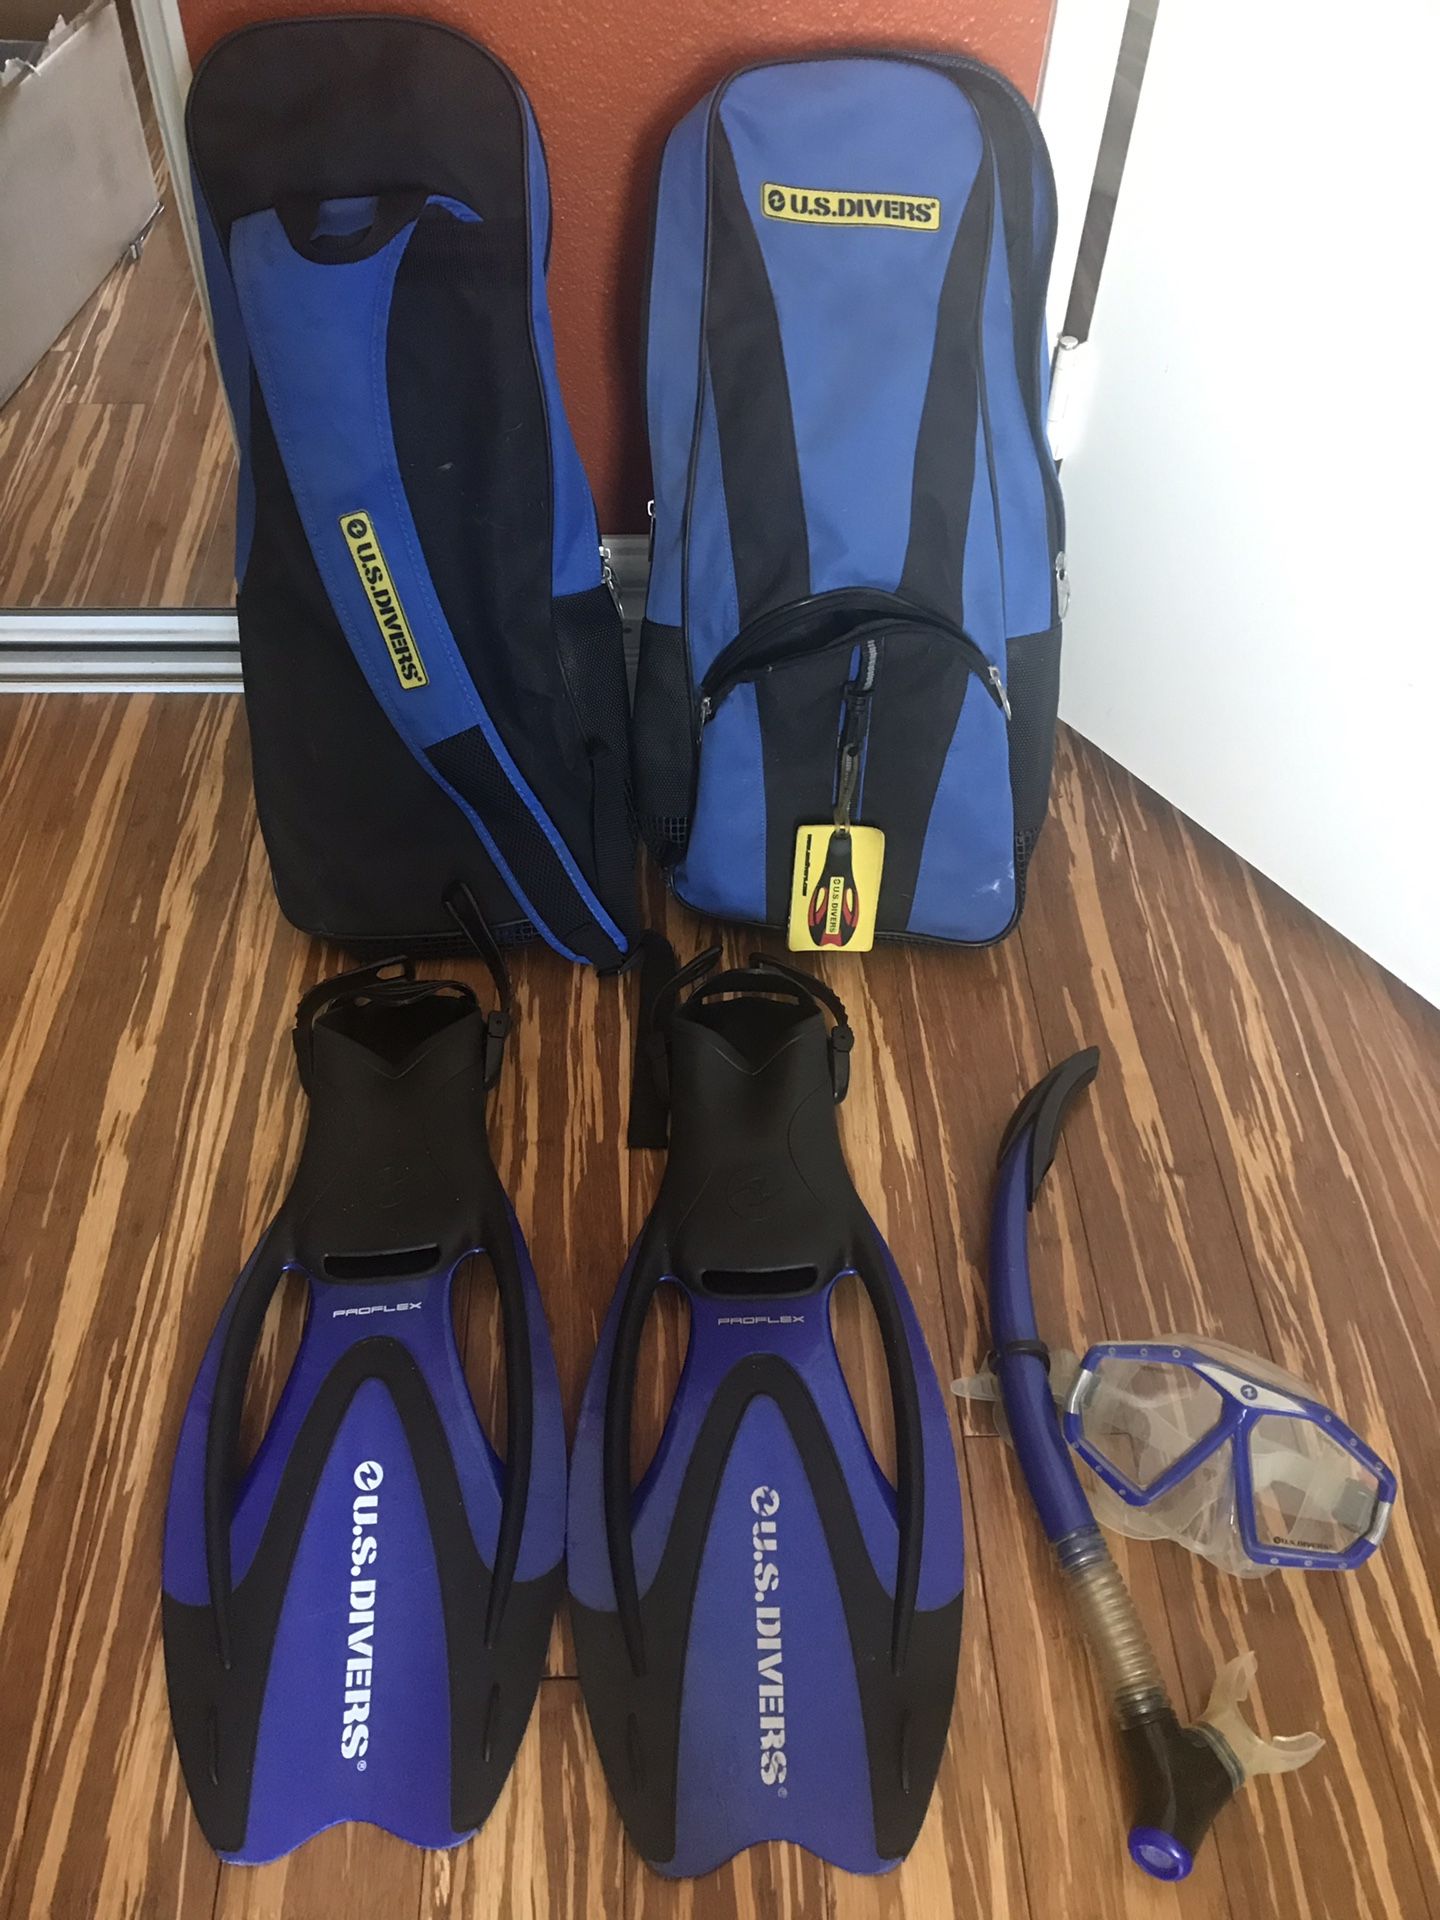 U.S. Divers snorkeling gear